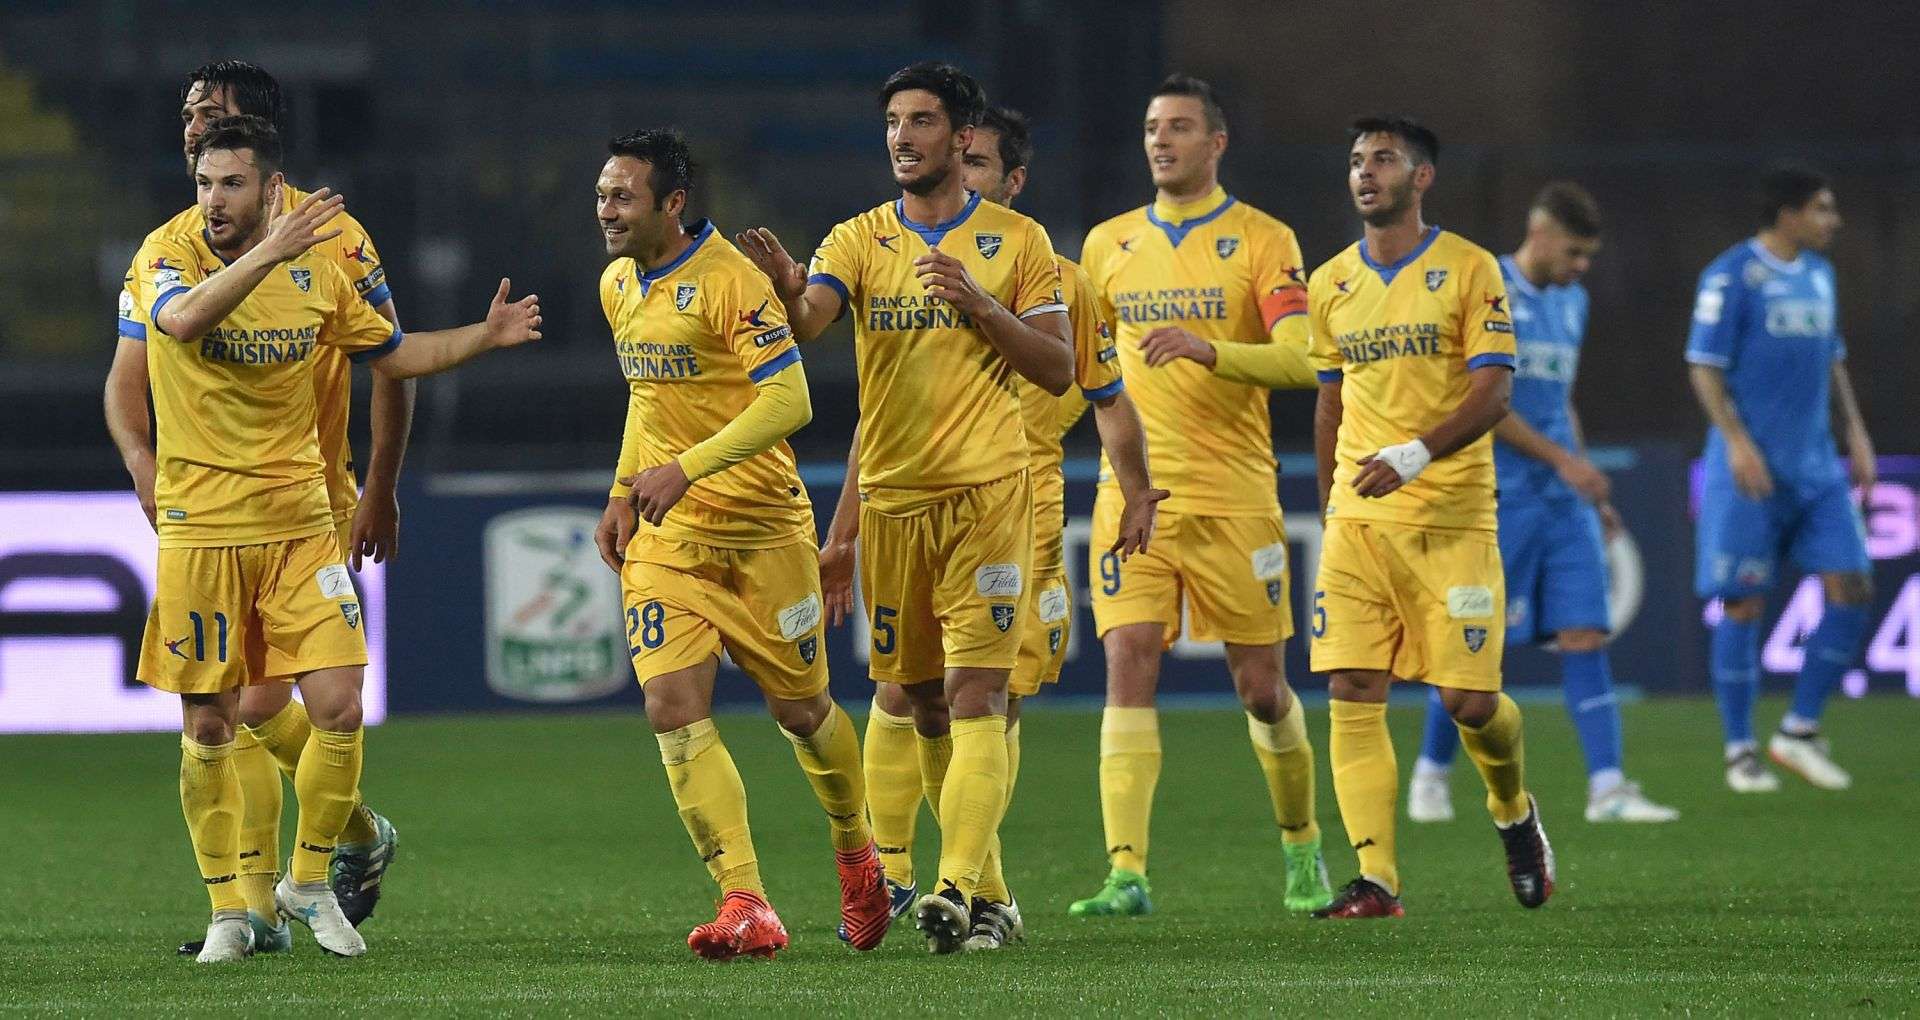 Frosinone players celebrating Empoli Frosinone Serie B